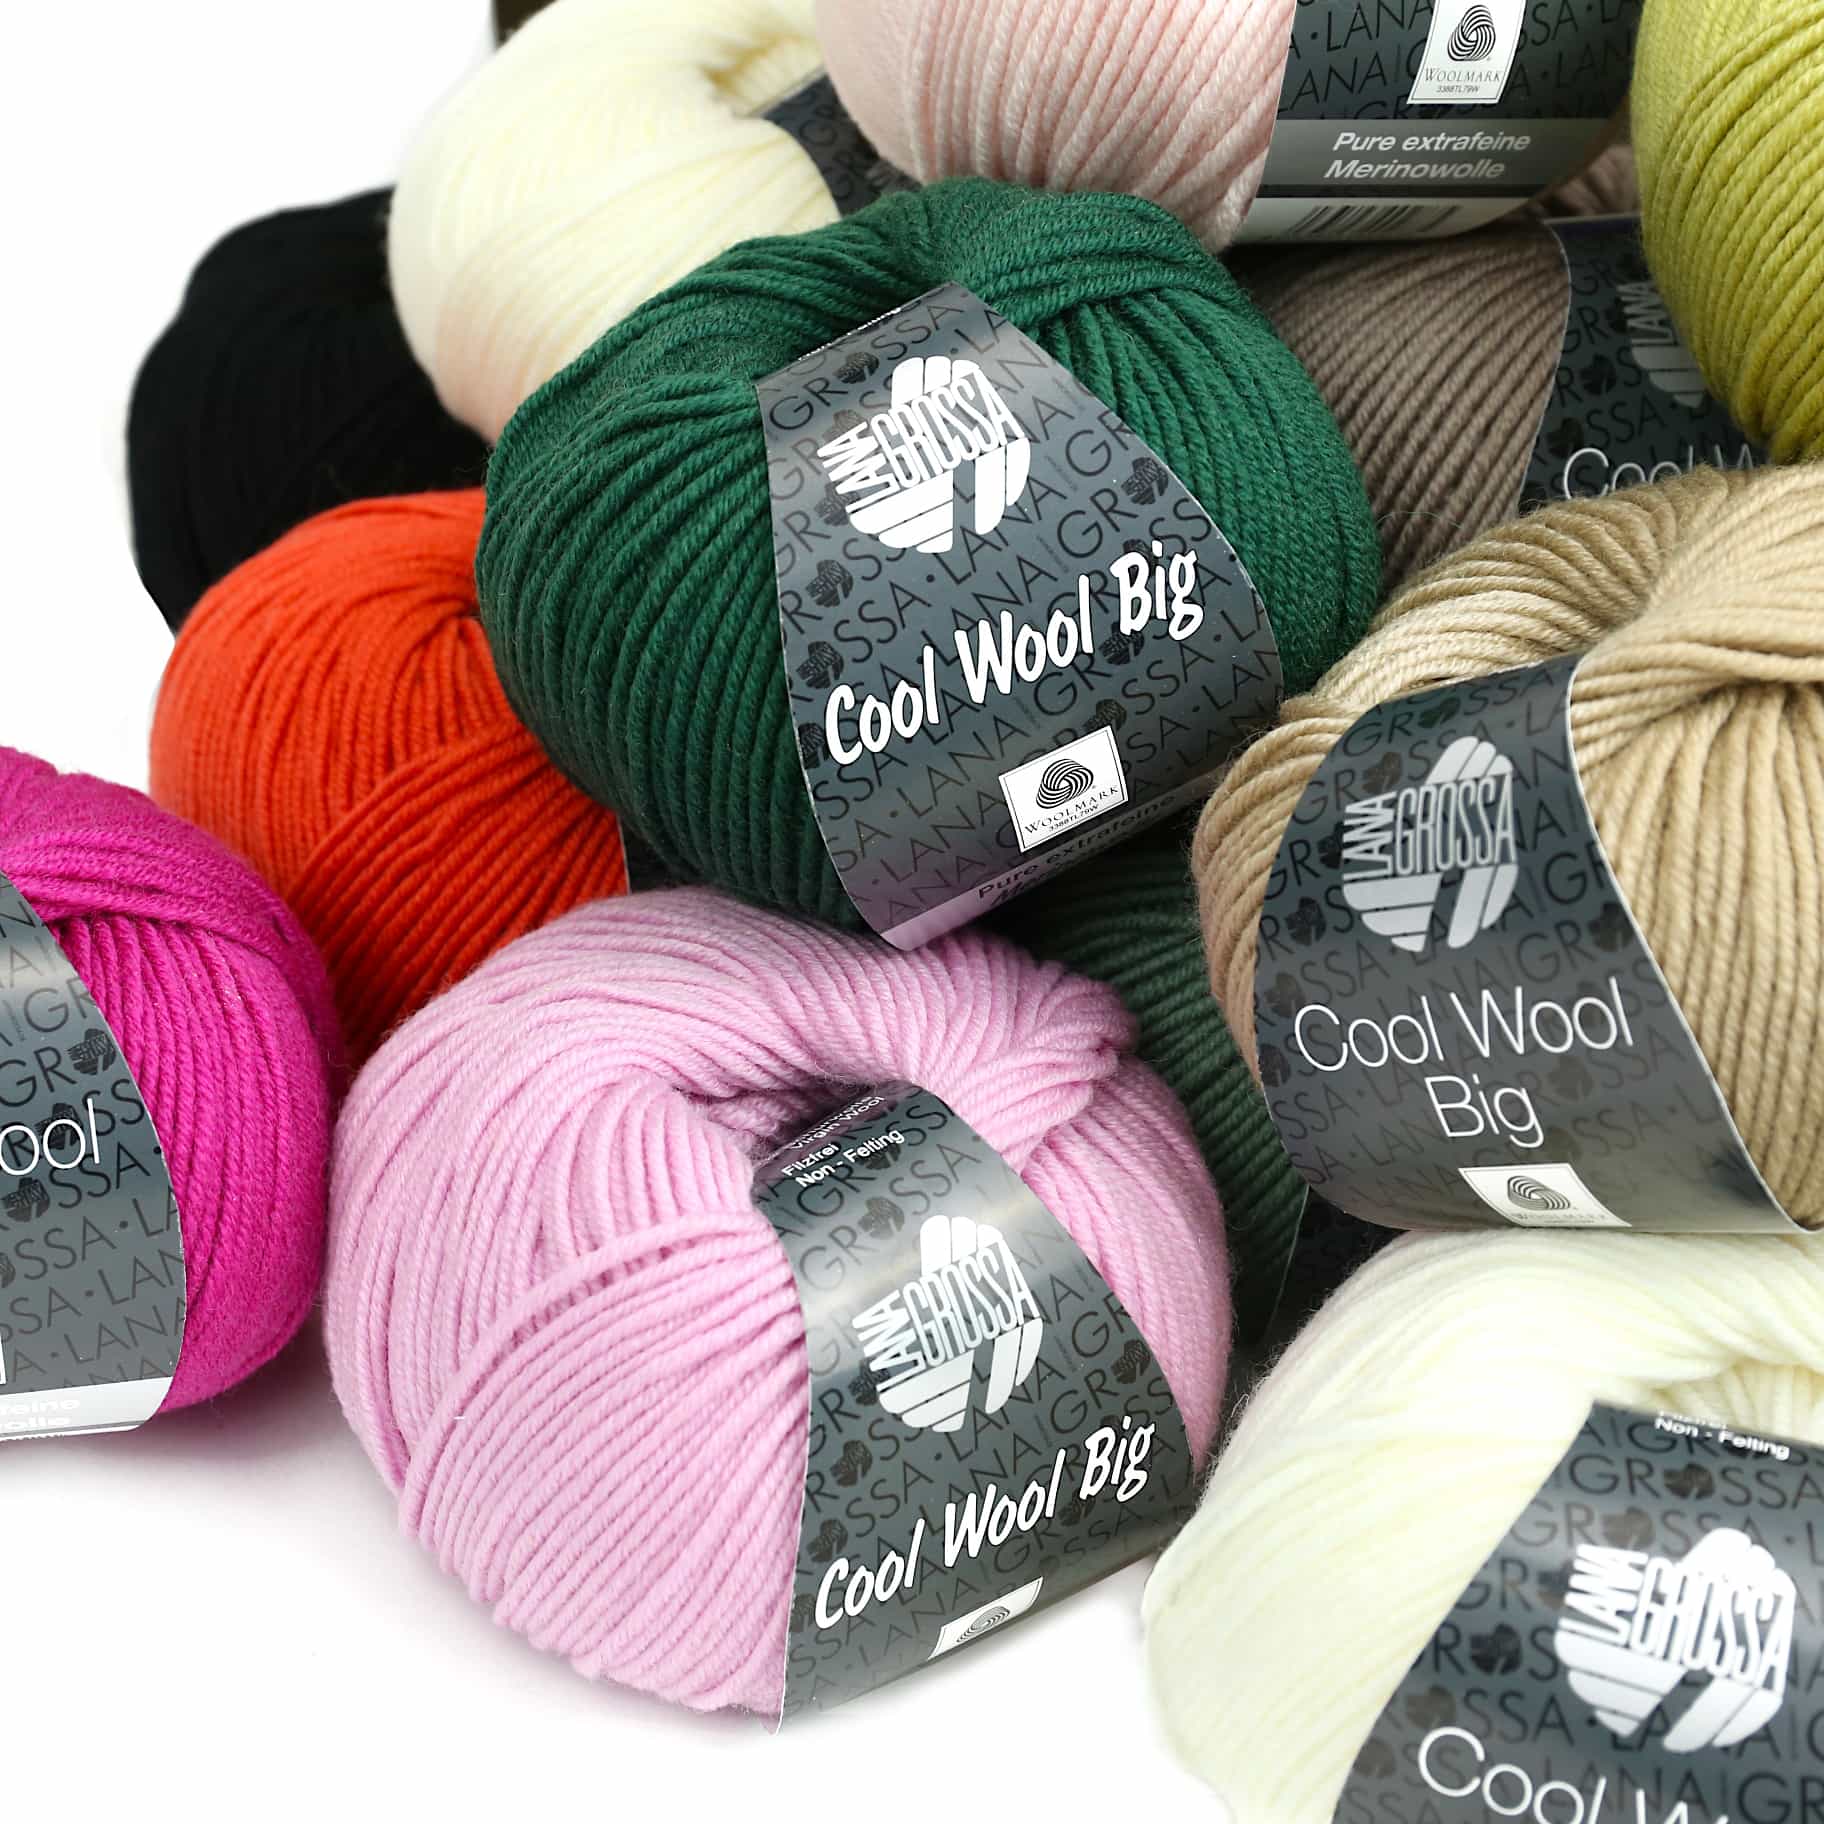 1 extrafeine Merinowolle - Cool Wool Big Melange - 120m - Lana Grossa -  Dunkelgrau (617)